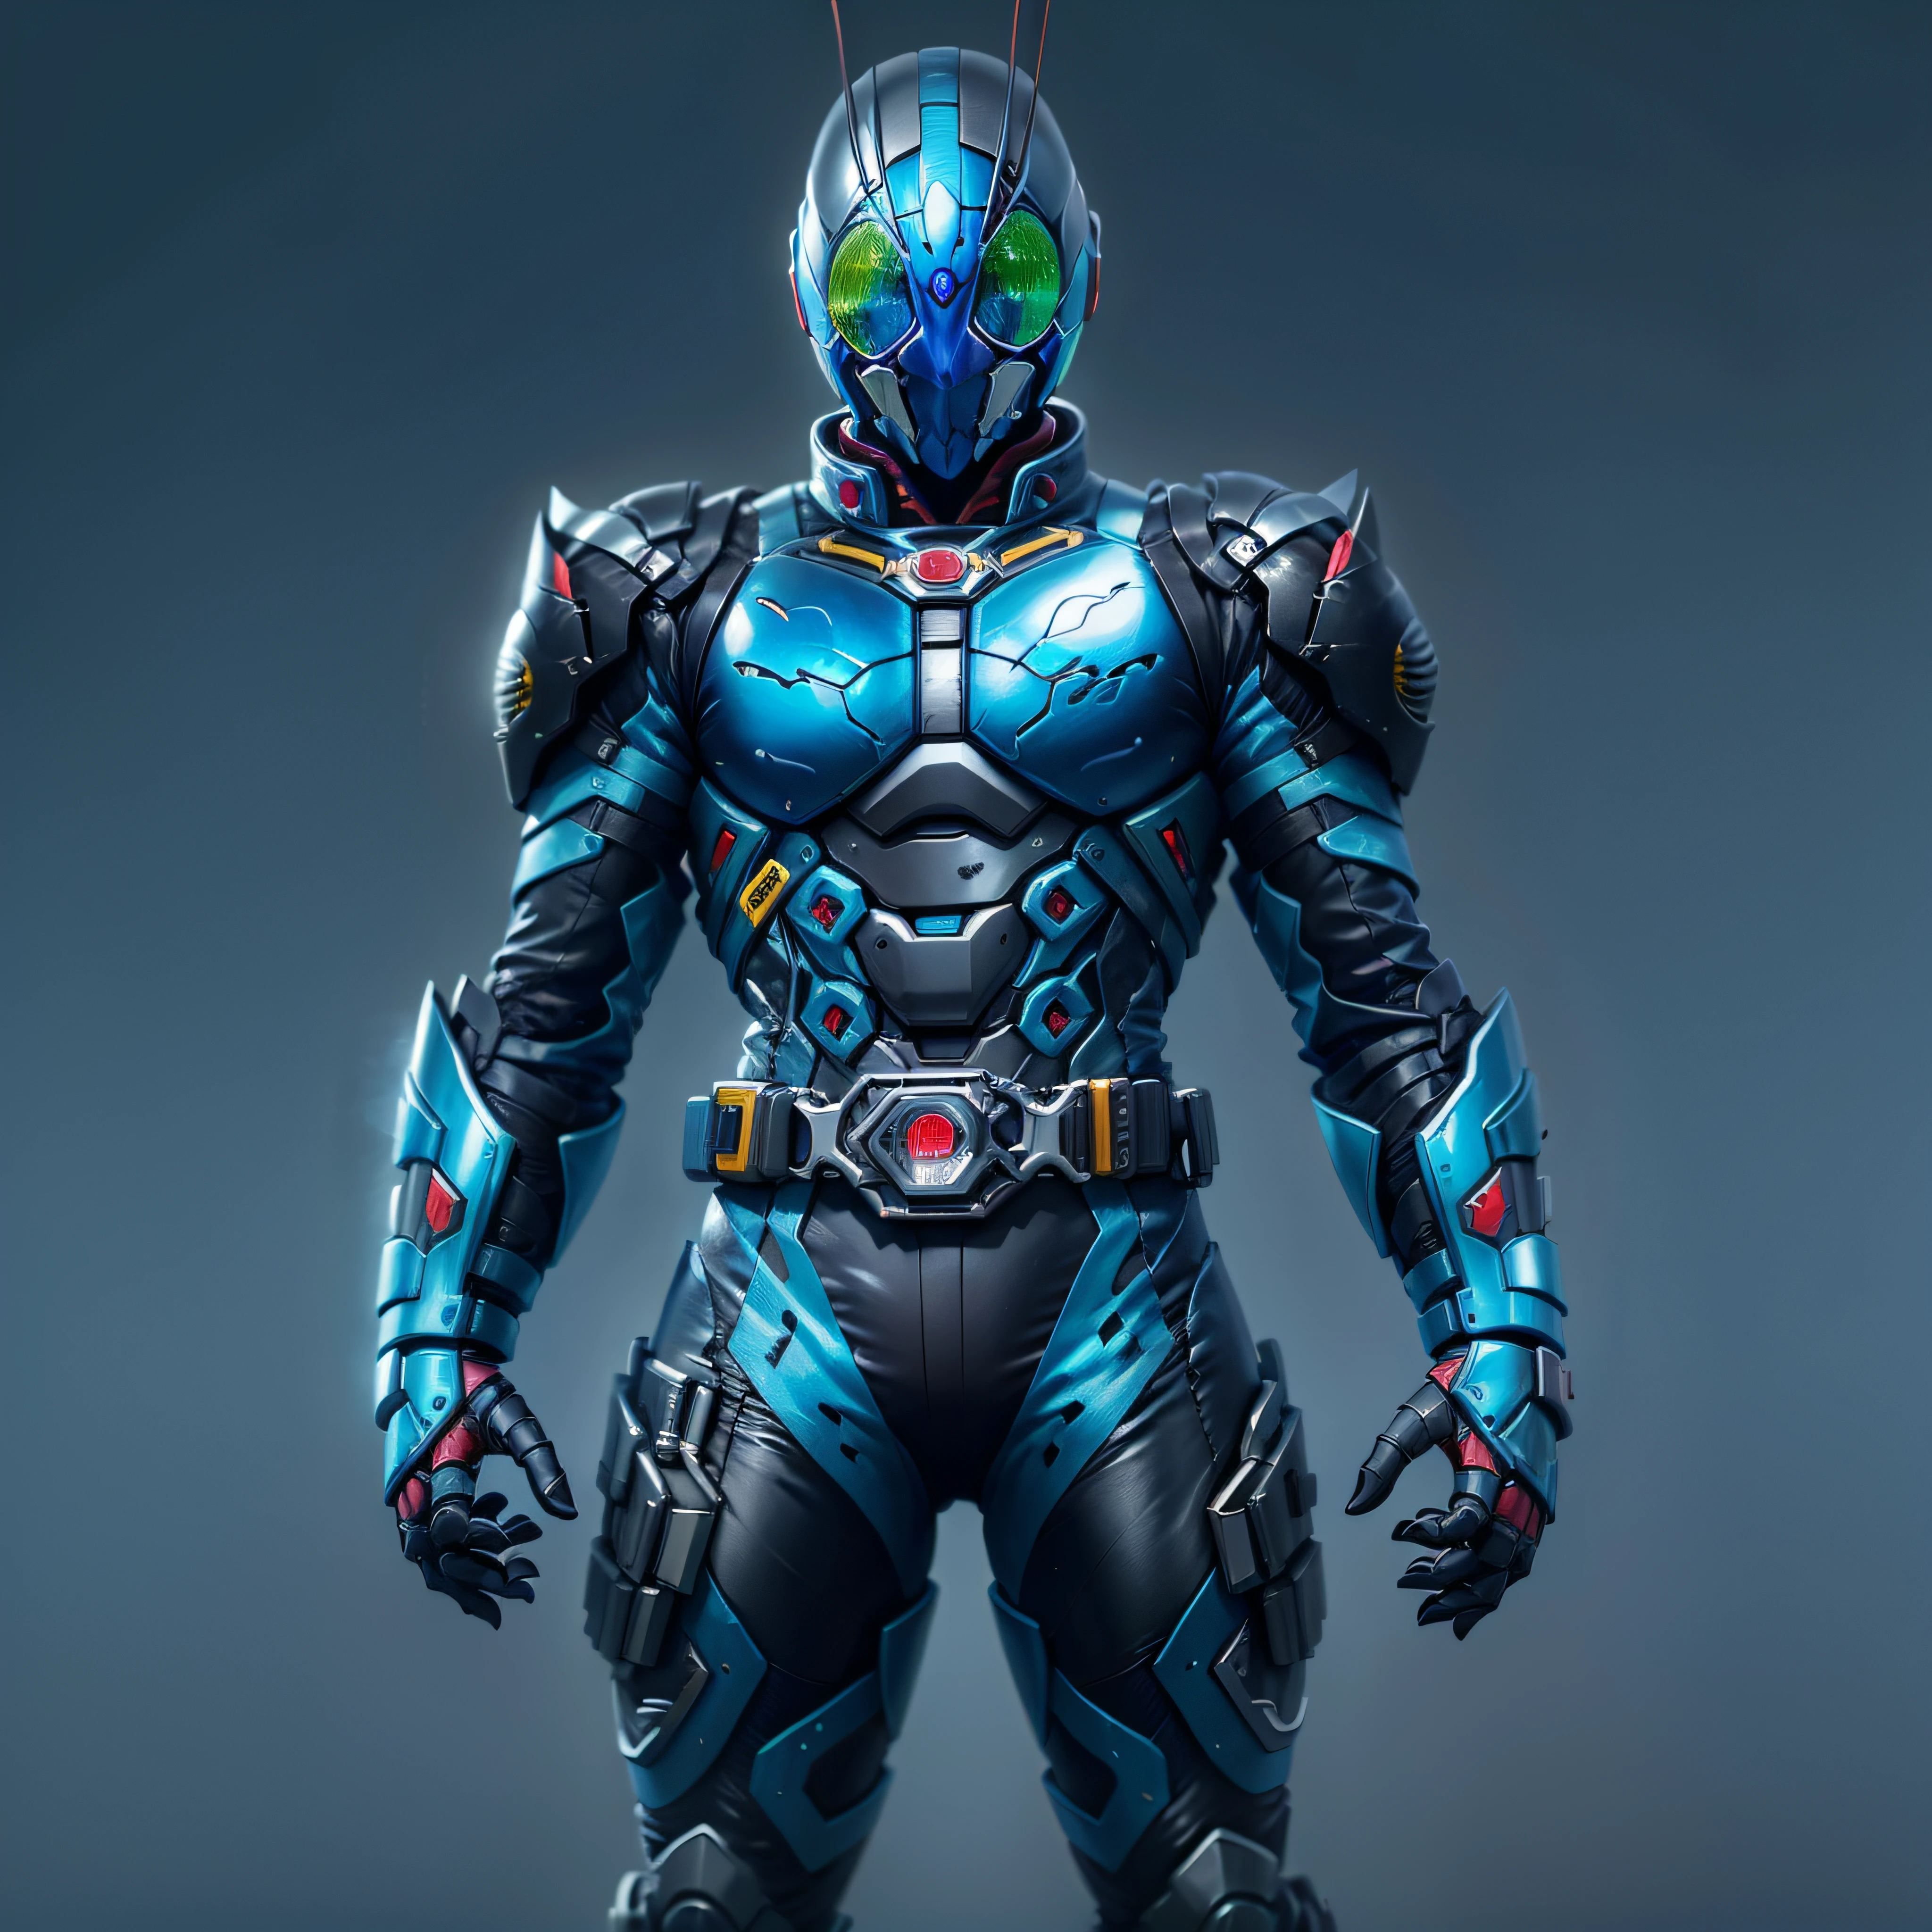 Jinete Kamen azul, armadura de plata, ropa gris y negra, traje técnico azul, agente secreto, Roboto